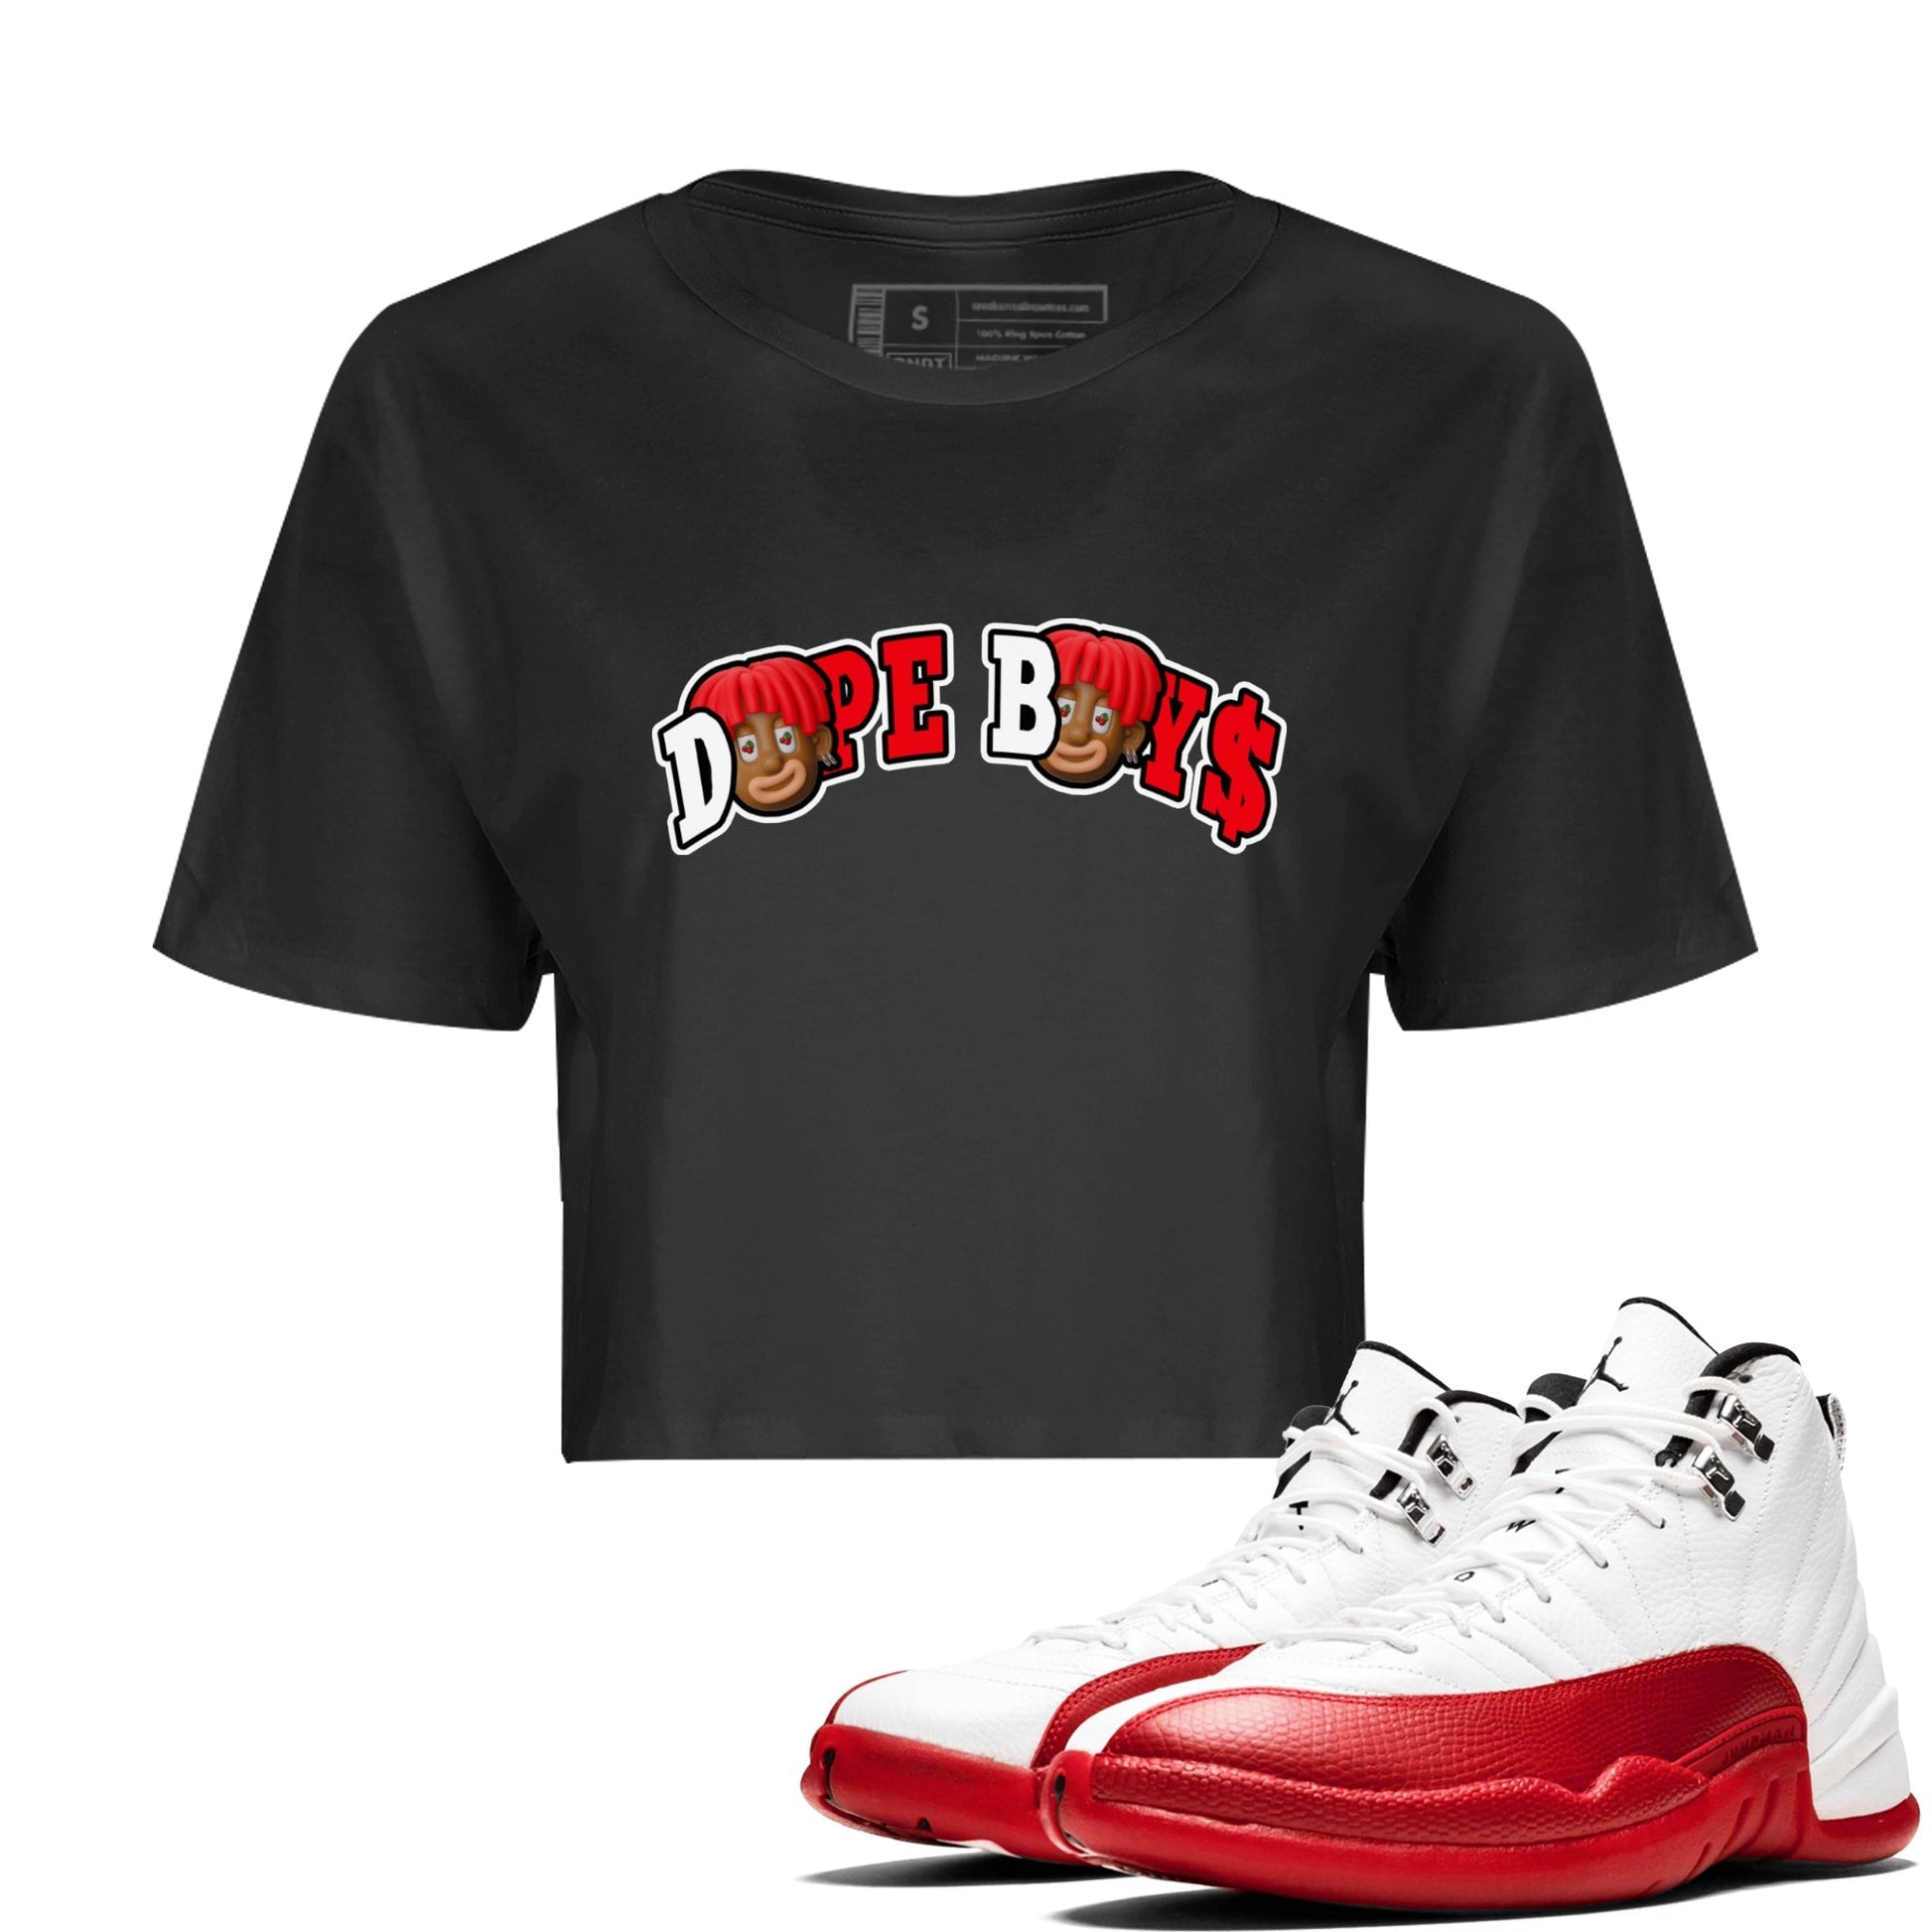 Air Jordan 12 Cherry Sneaker Match Tees Dope Boys Streetwear Sneaker Shirt AJ12 Cherry Sneaker Release Tees Women's Shirts Black 1